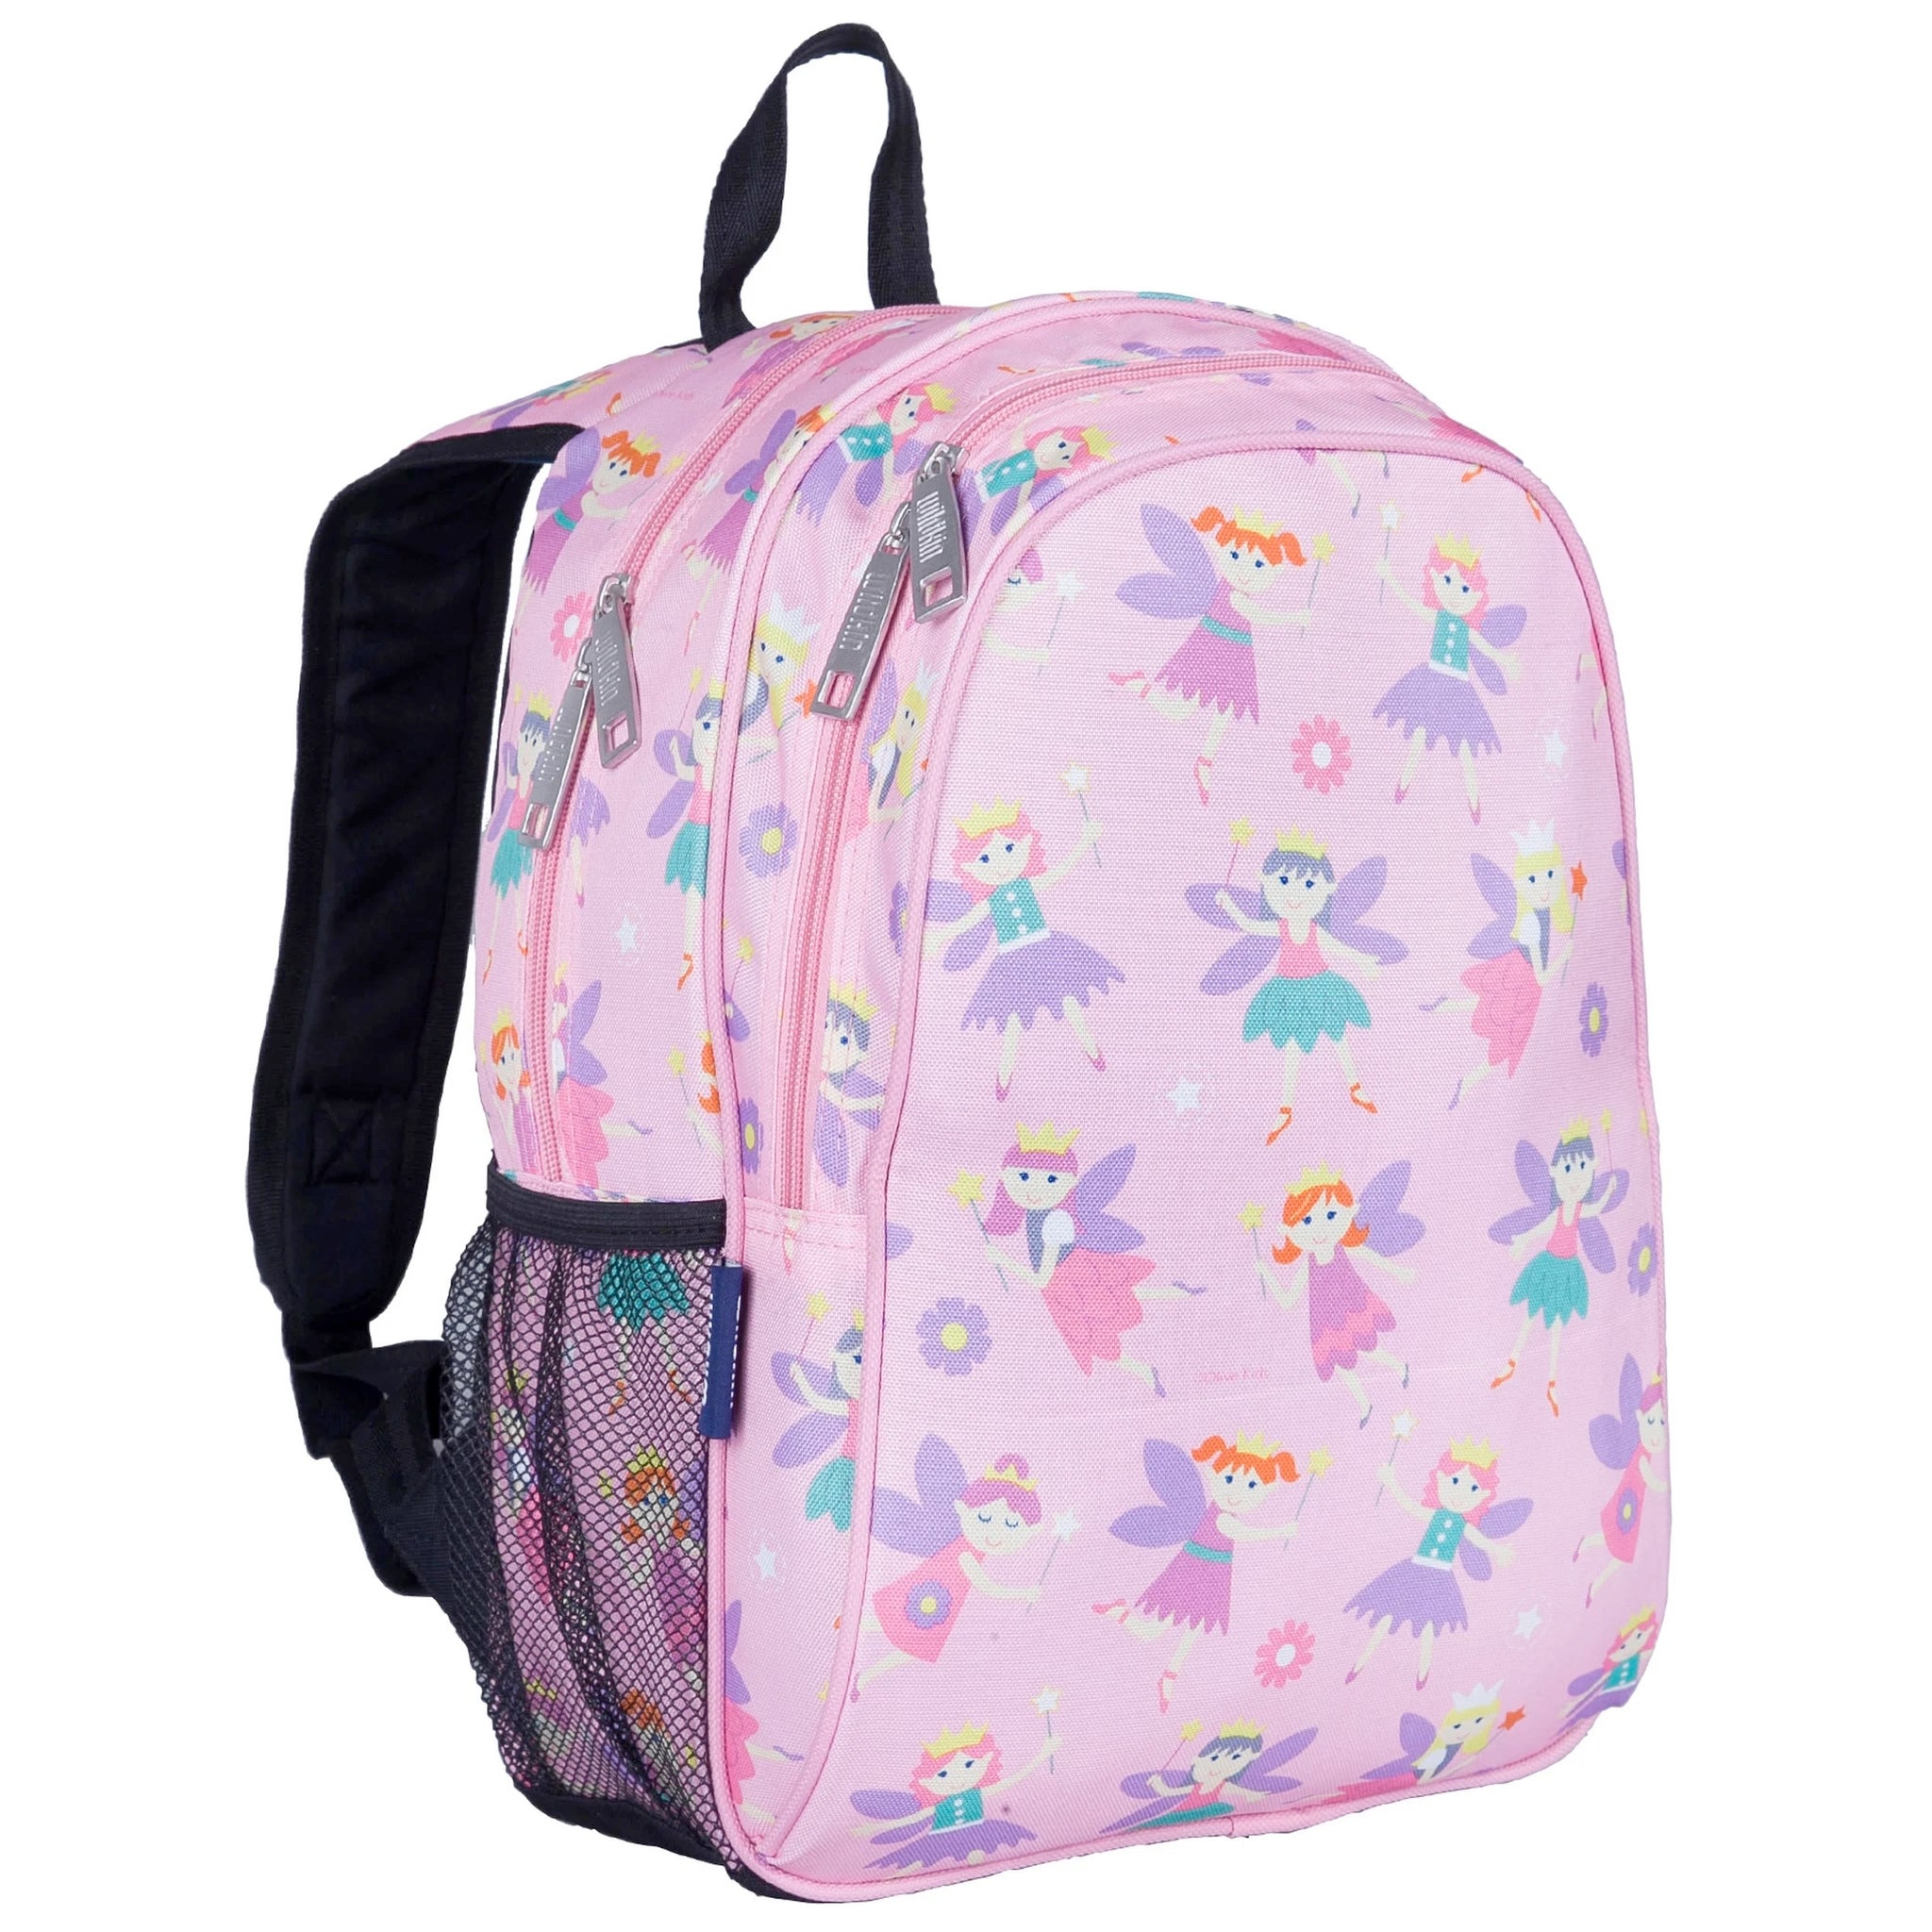 Fairy Princess Backpack